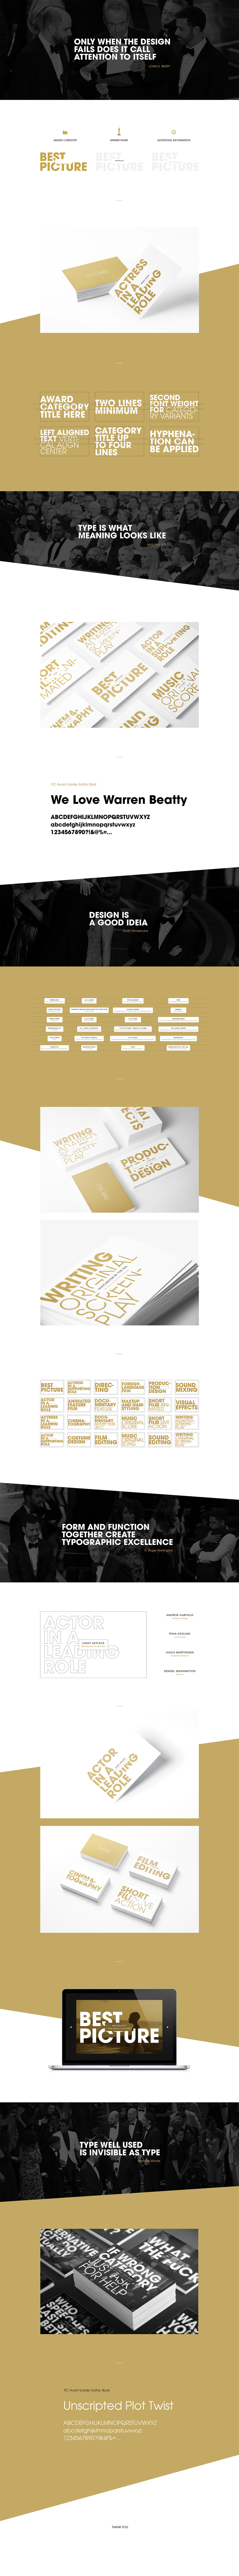 Oscars typography   warren beatty graphic design  card design Printing award category Academy Awards winning card